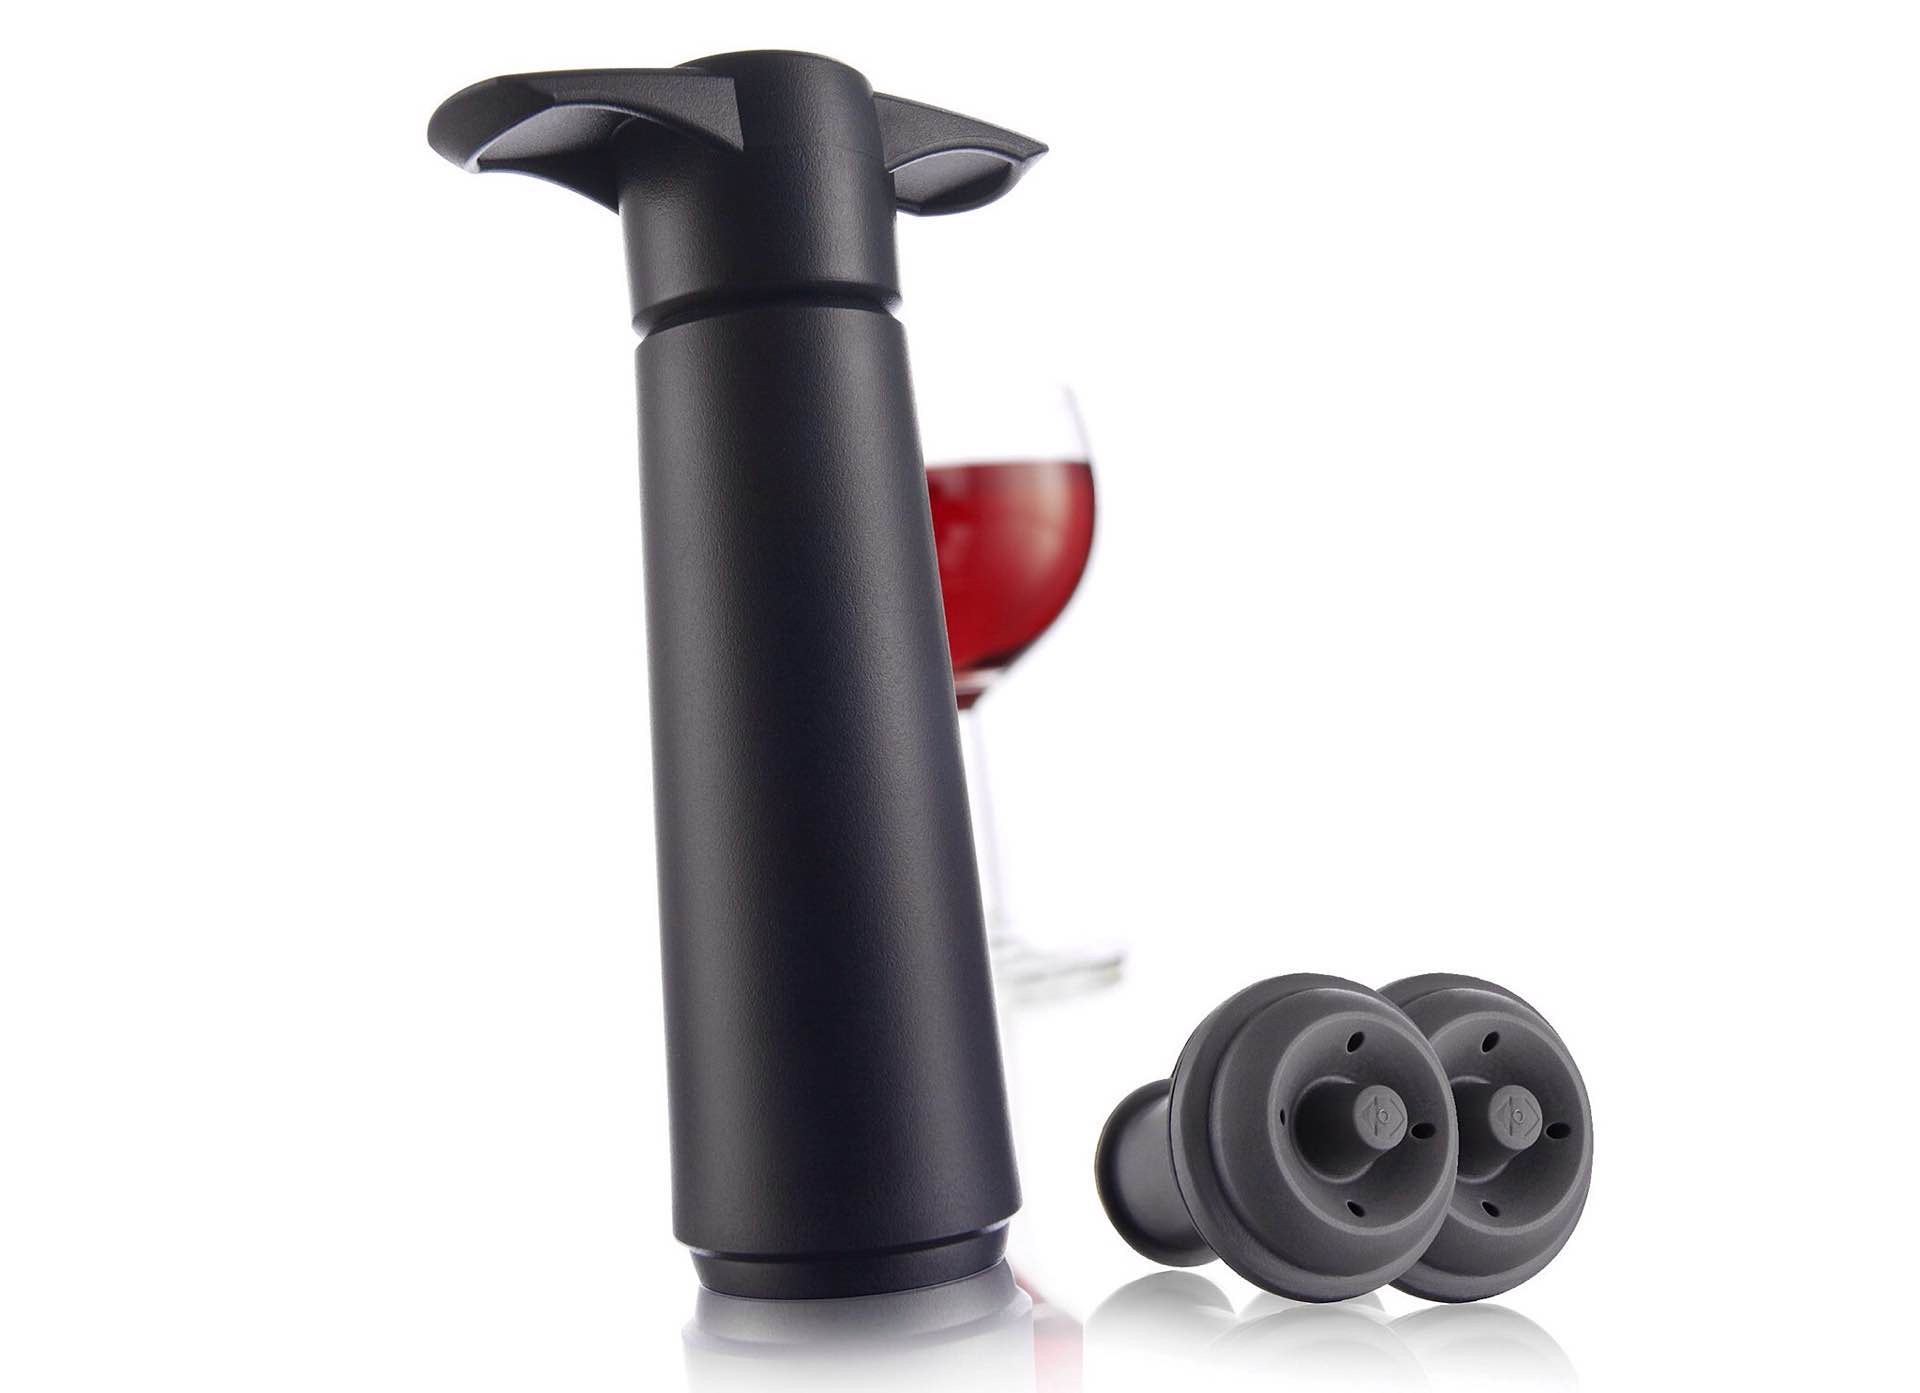 Vacu Vin's Wine Saver vacuum pump. ($12)